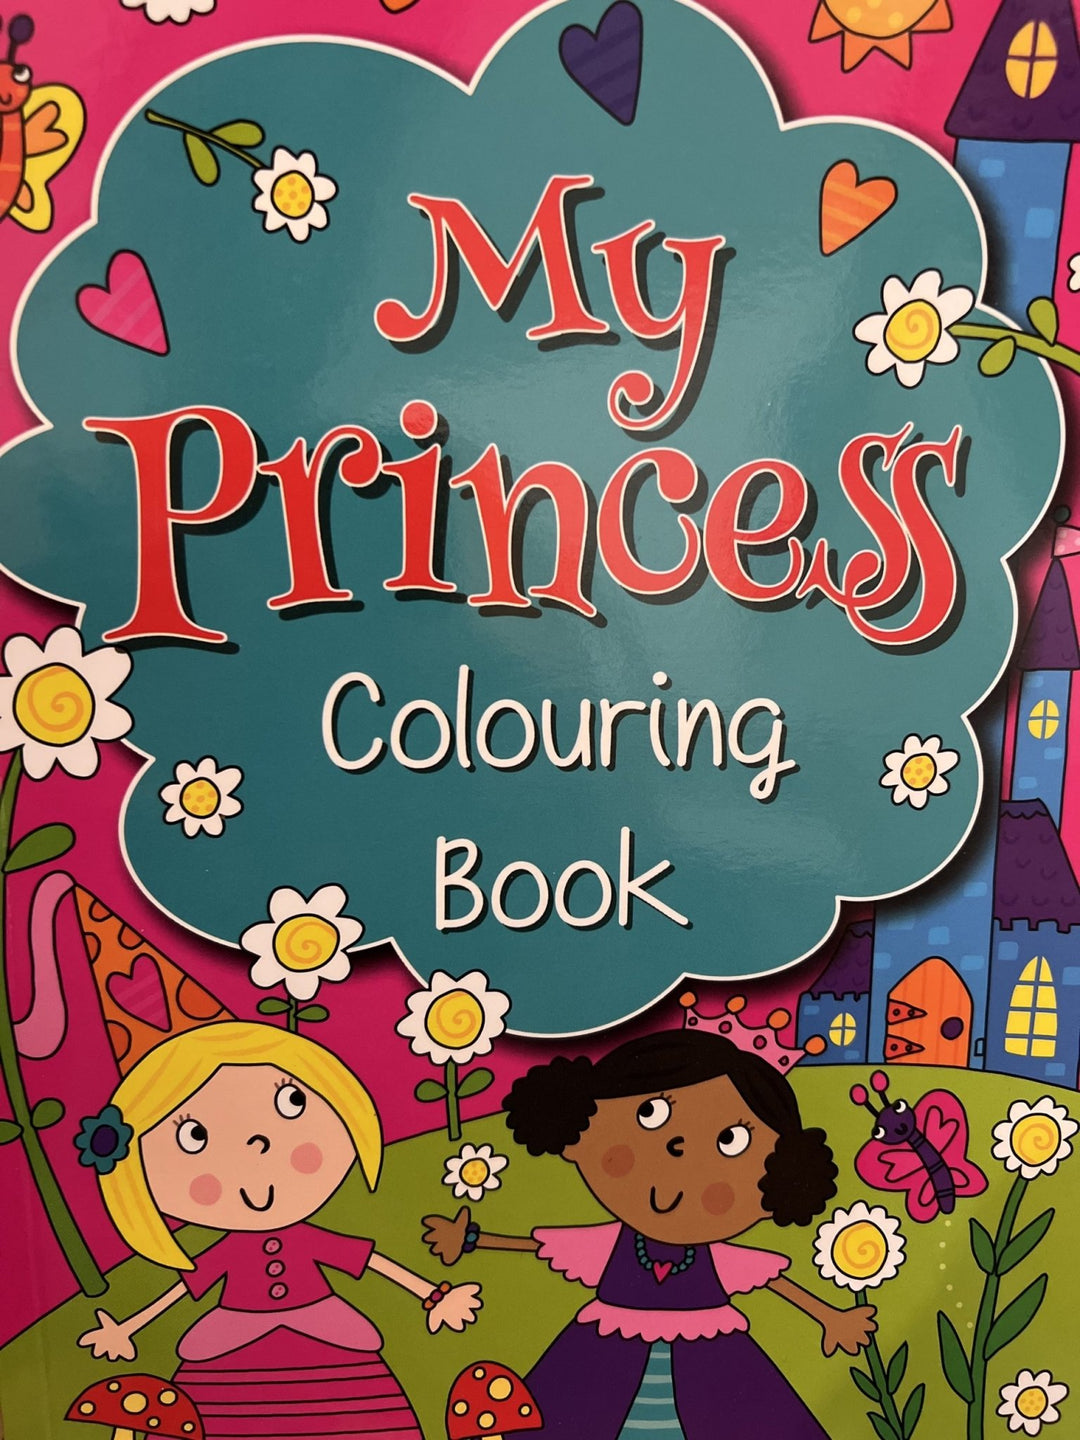 My Princess Colouring Book - #HolaNanu#NDIS #creativekids